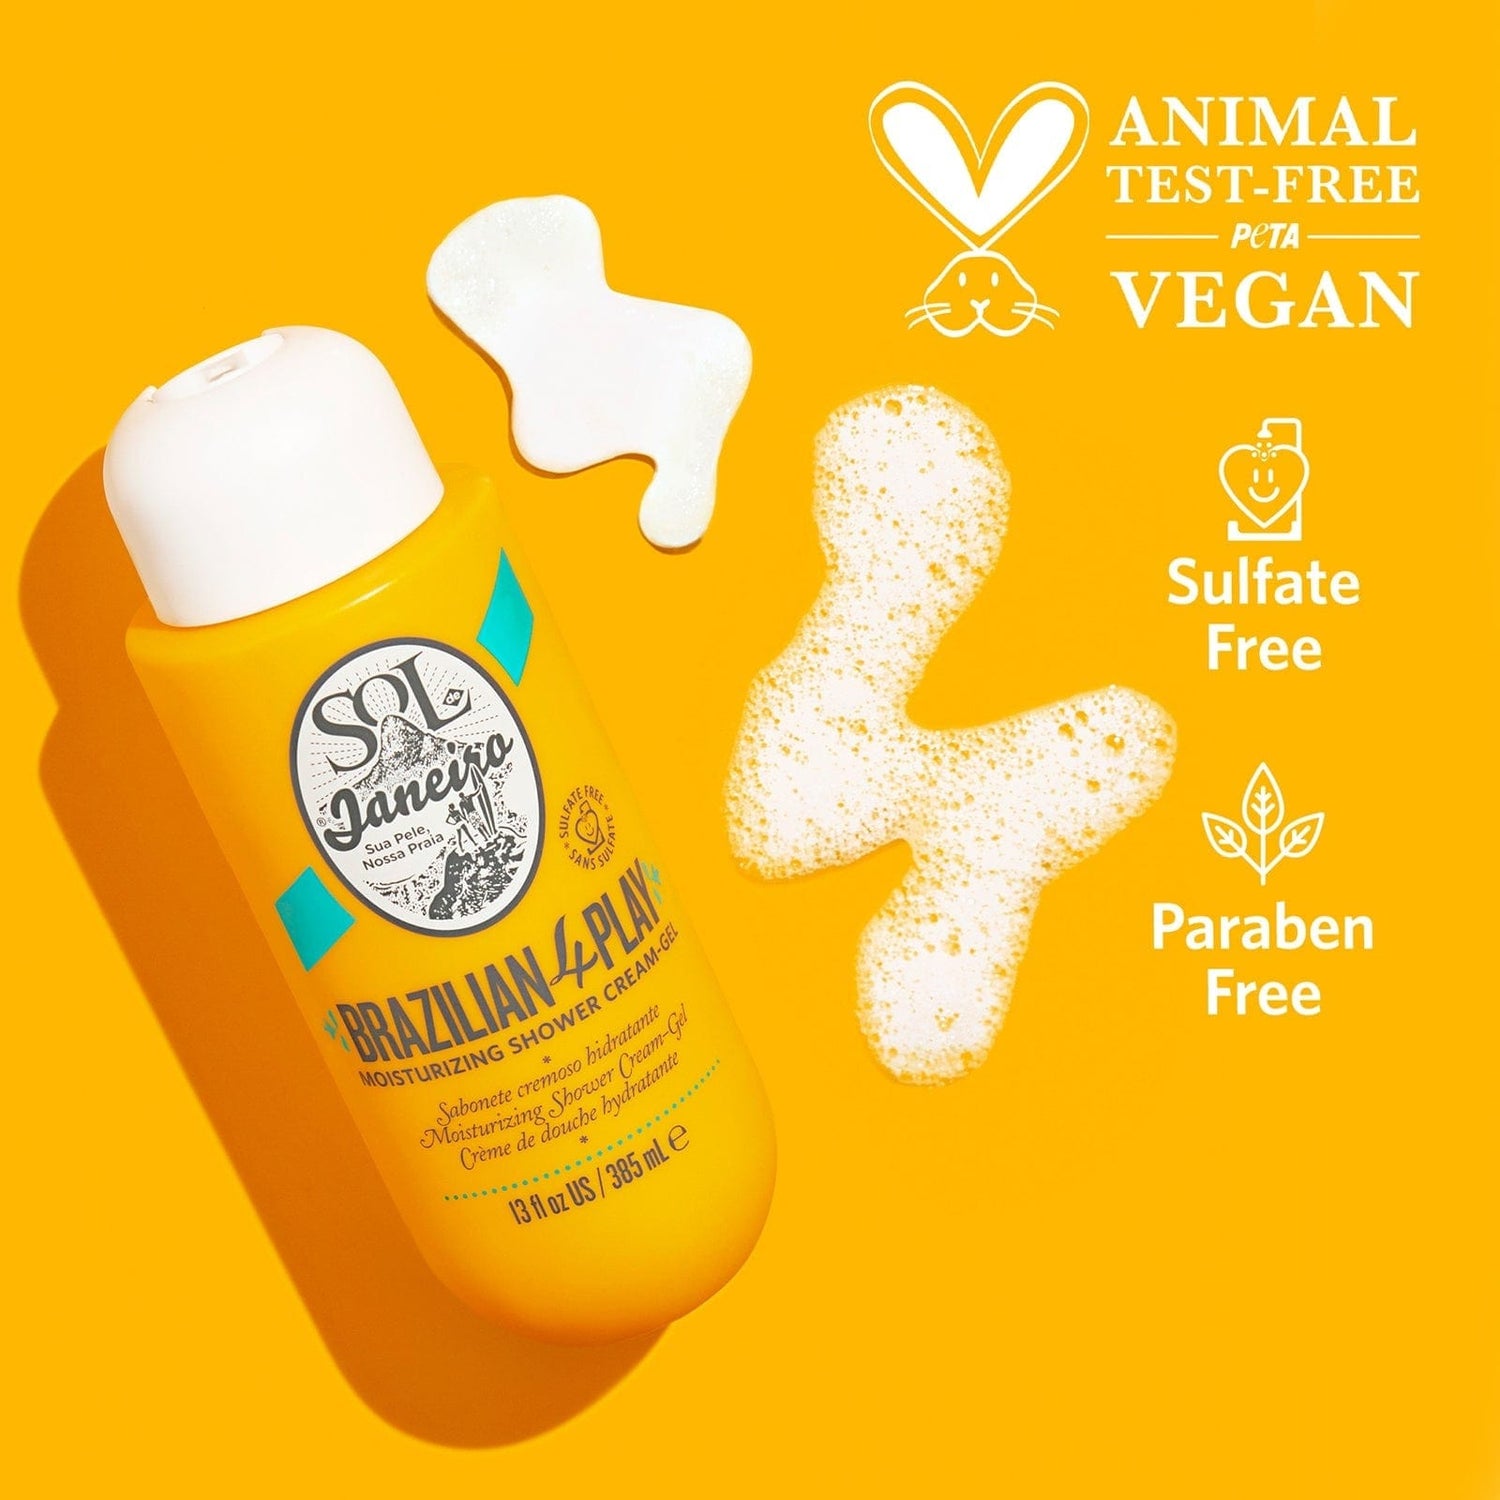 Animal test-free - PETA and vegan. Sulfate free and paraben free